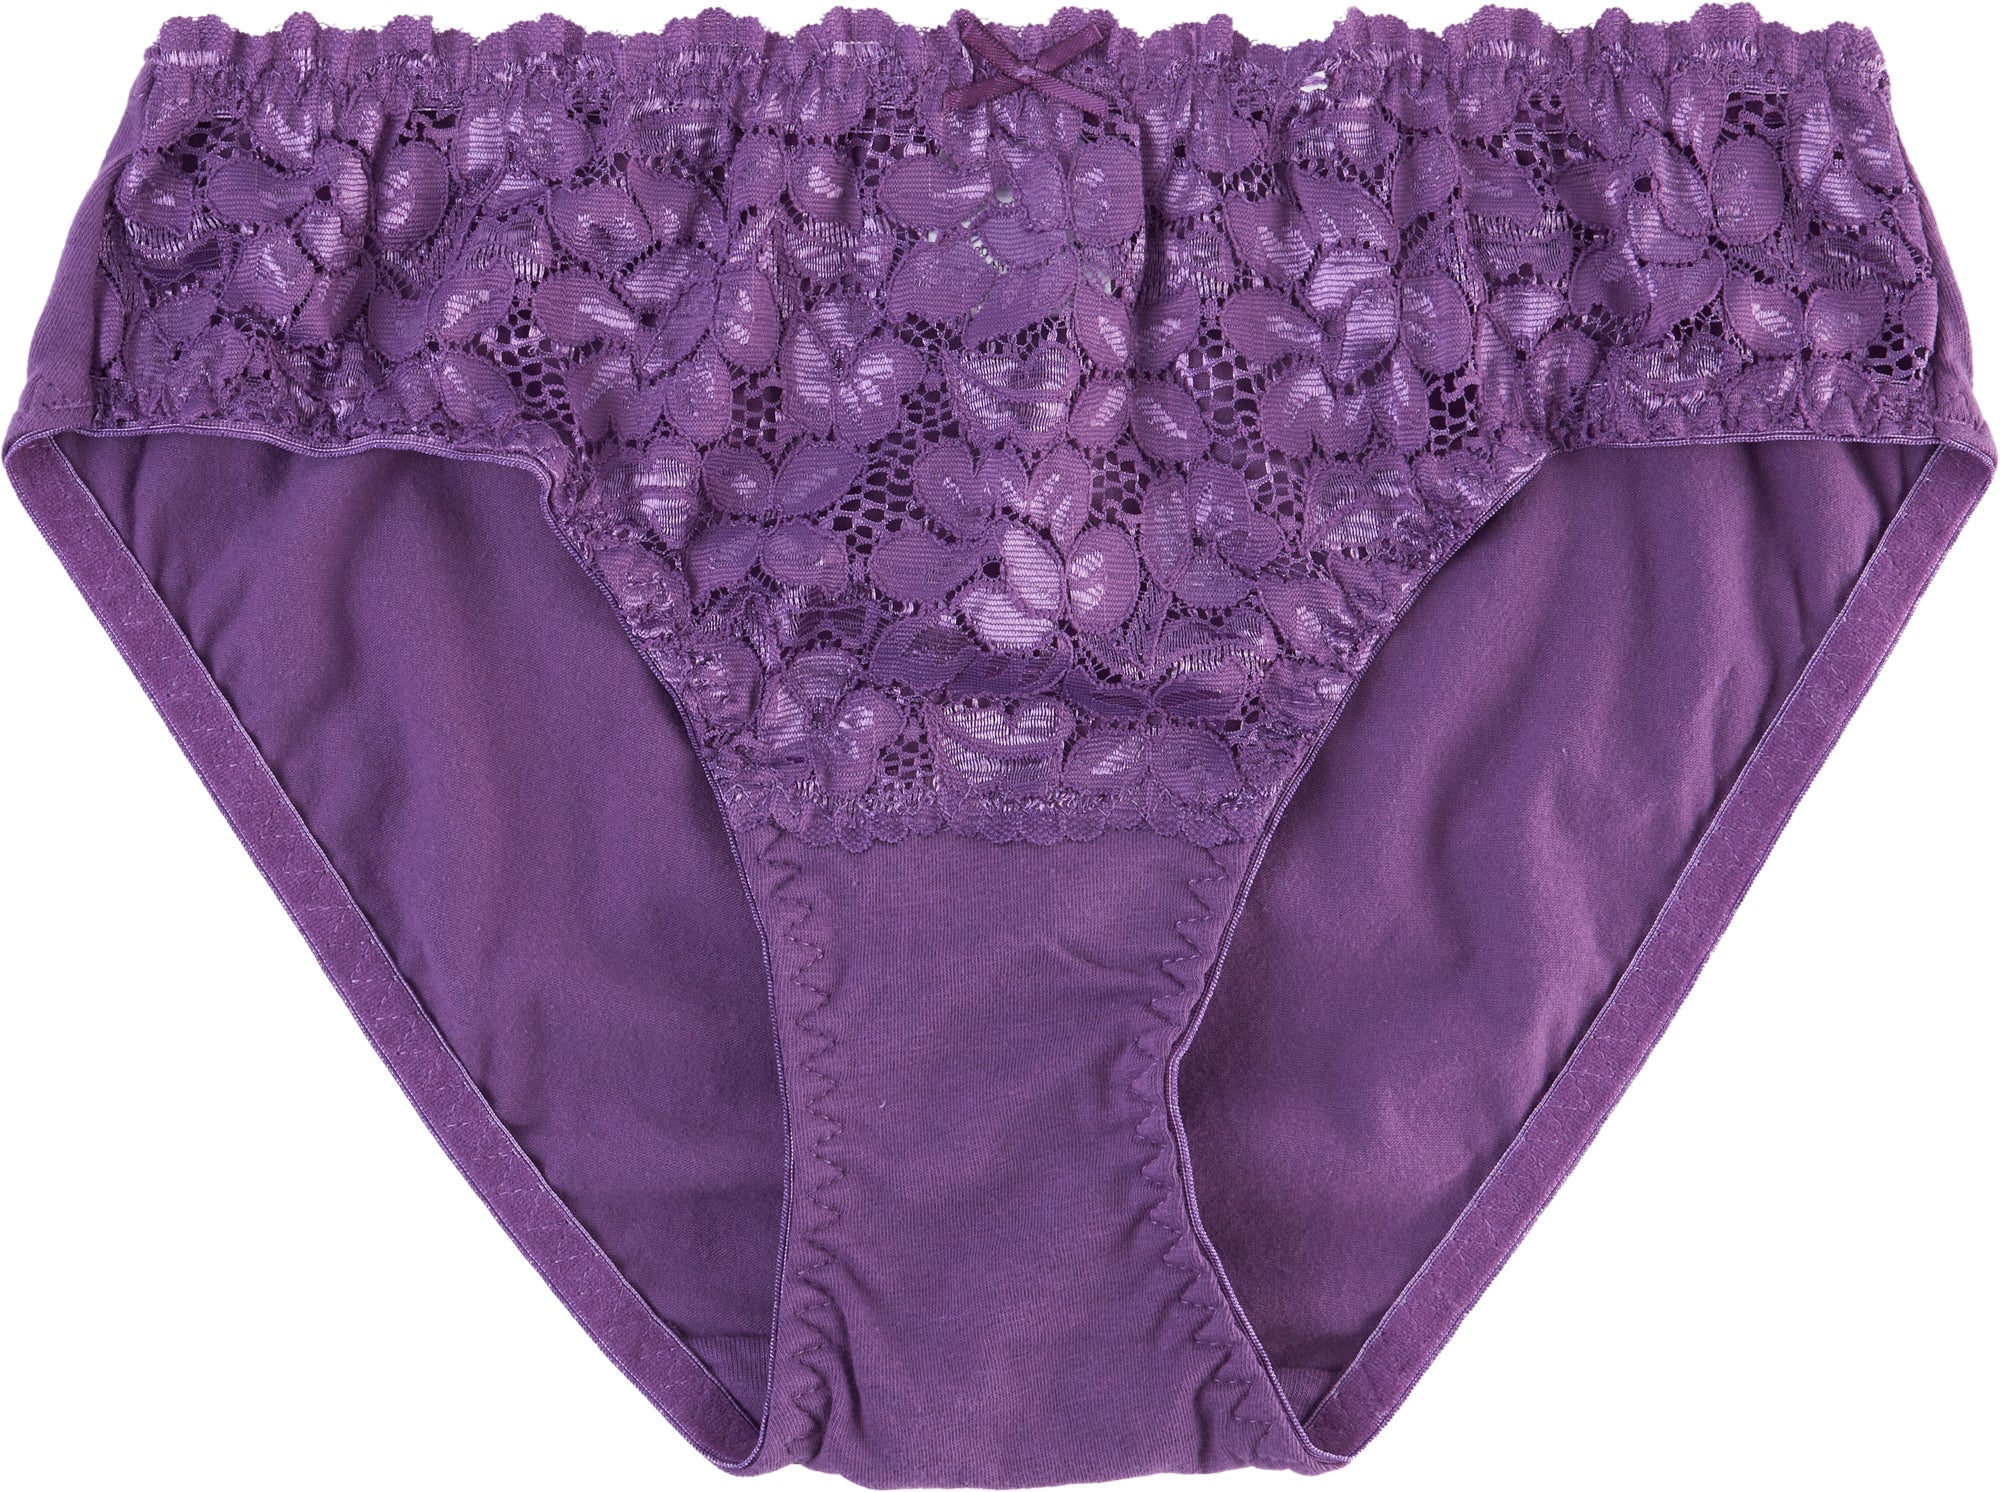 Woman Underwear, Scallop lace Panty set, 5 Pack PurplePeanuts, South  Africa